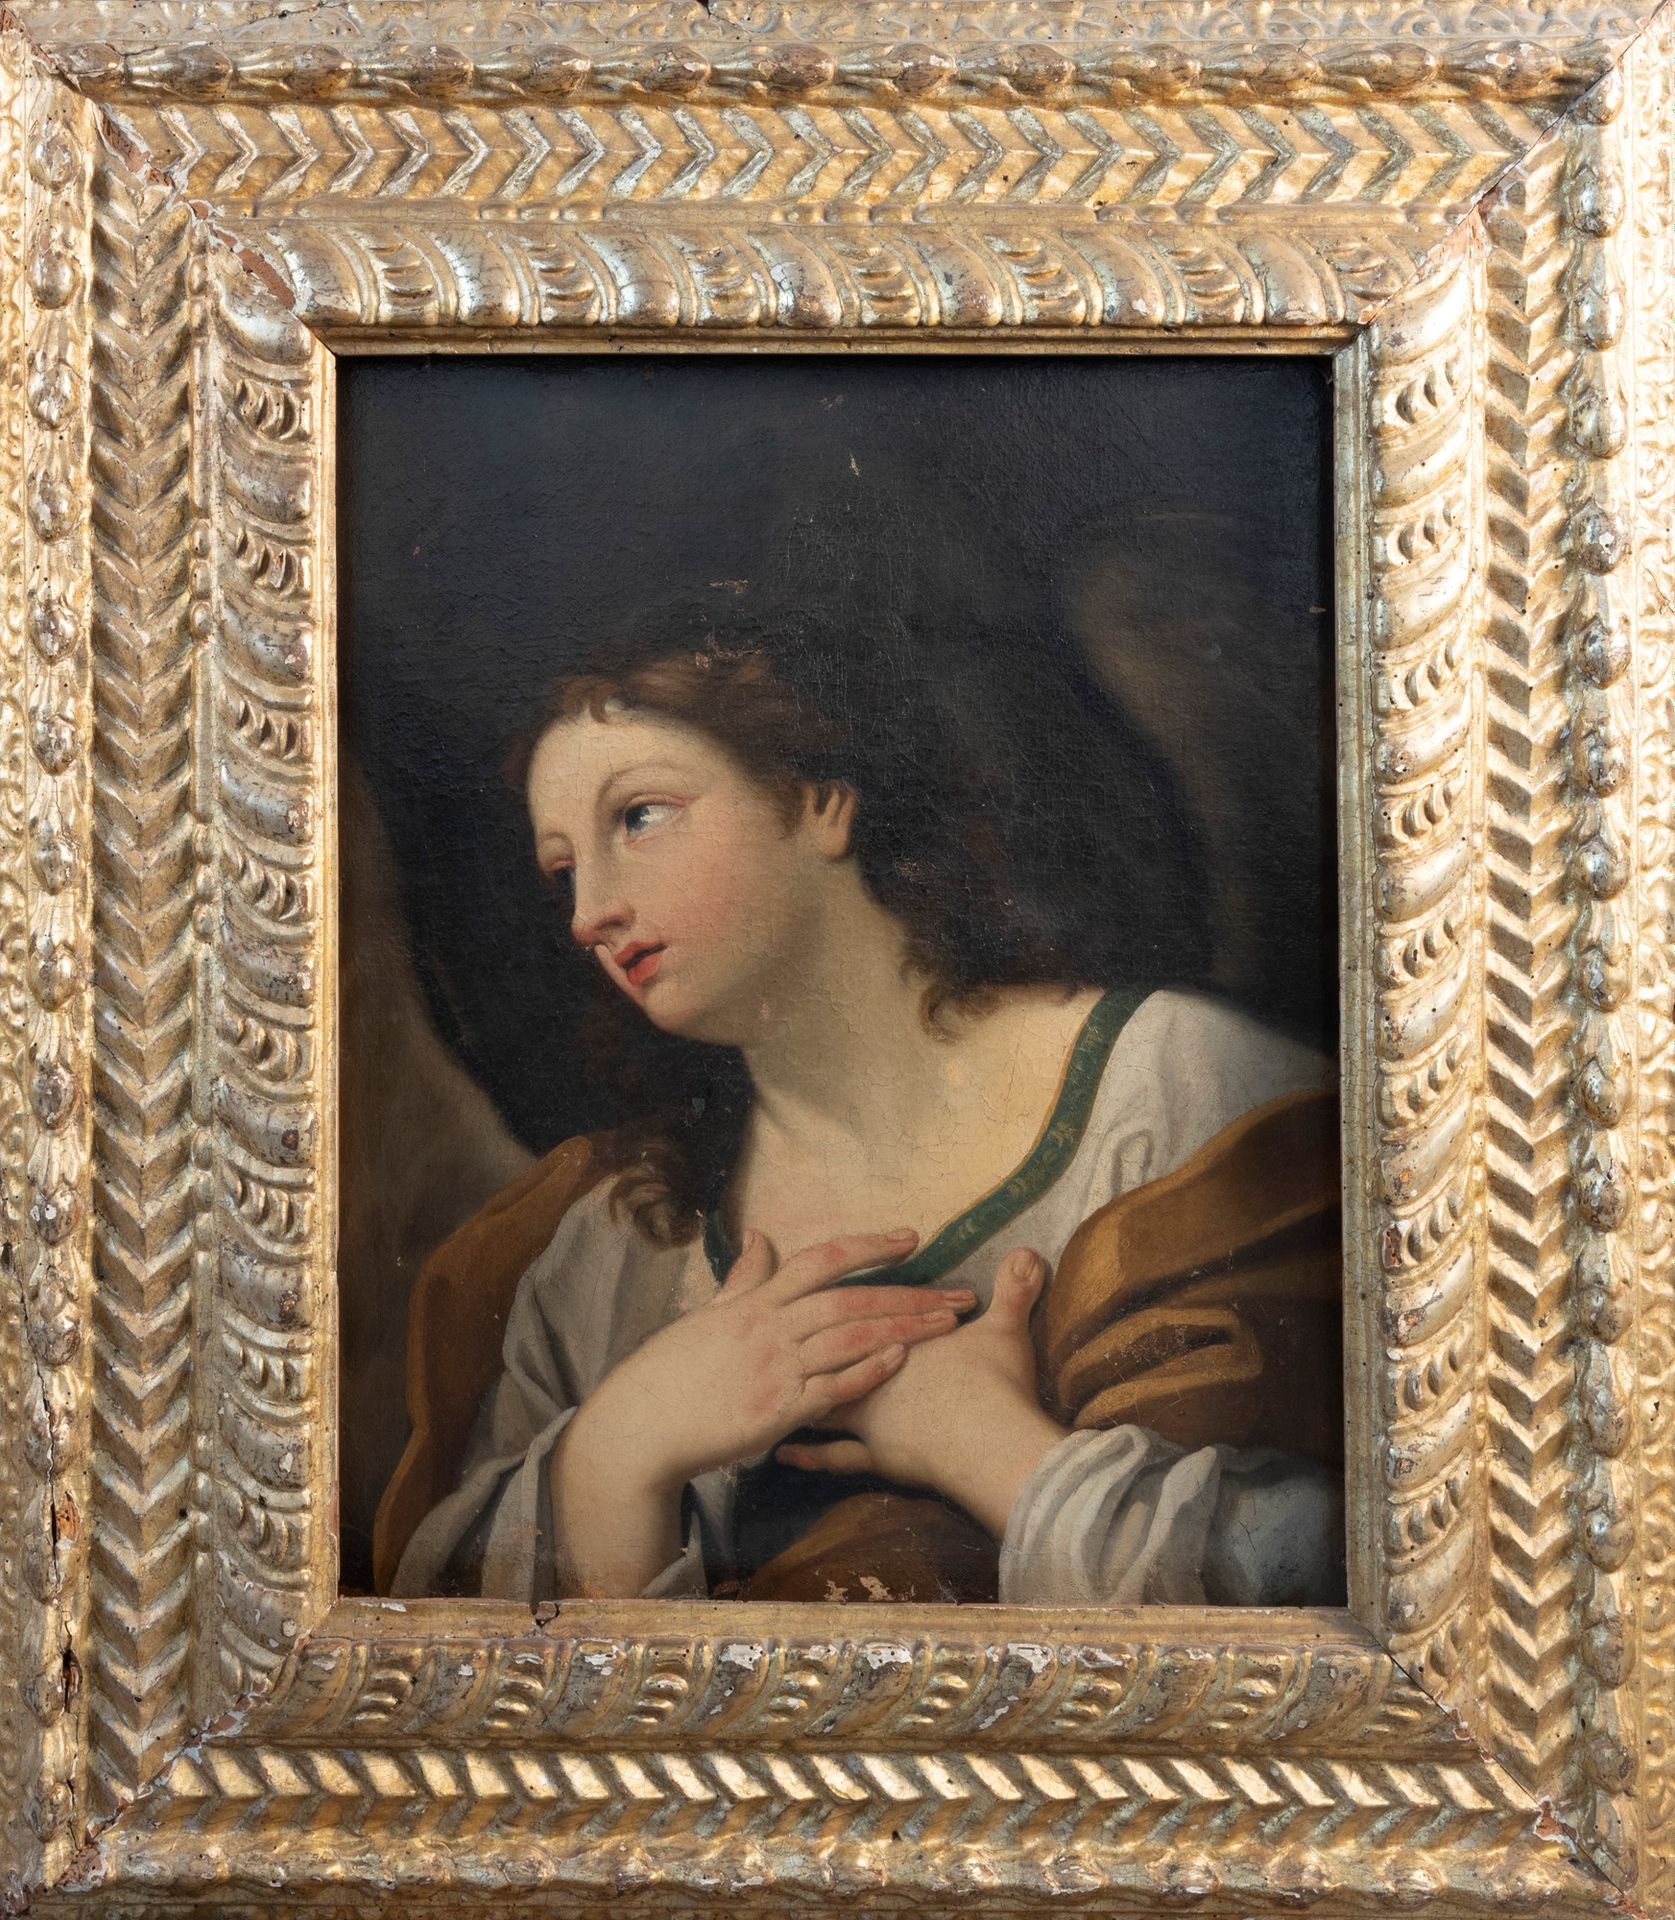 Null Scuola dell'Italia centrale, secolo XVII - Anunciar ángel

óleo sobre lienz&hellip;